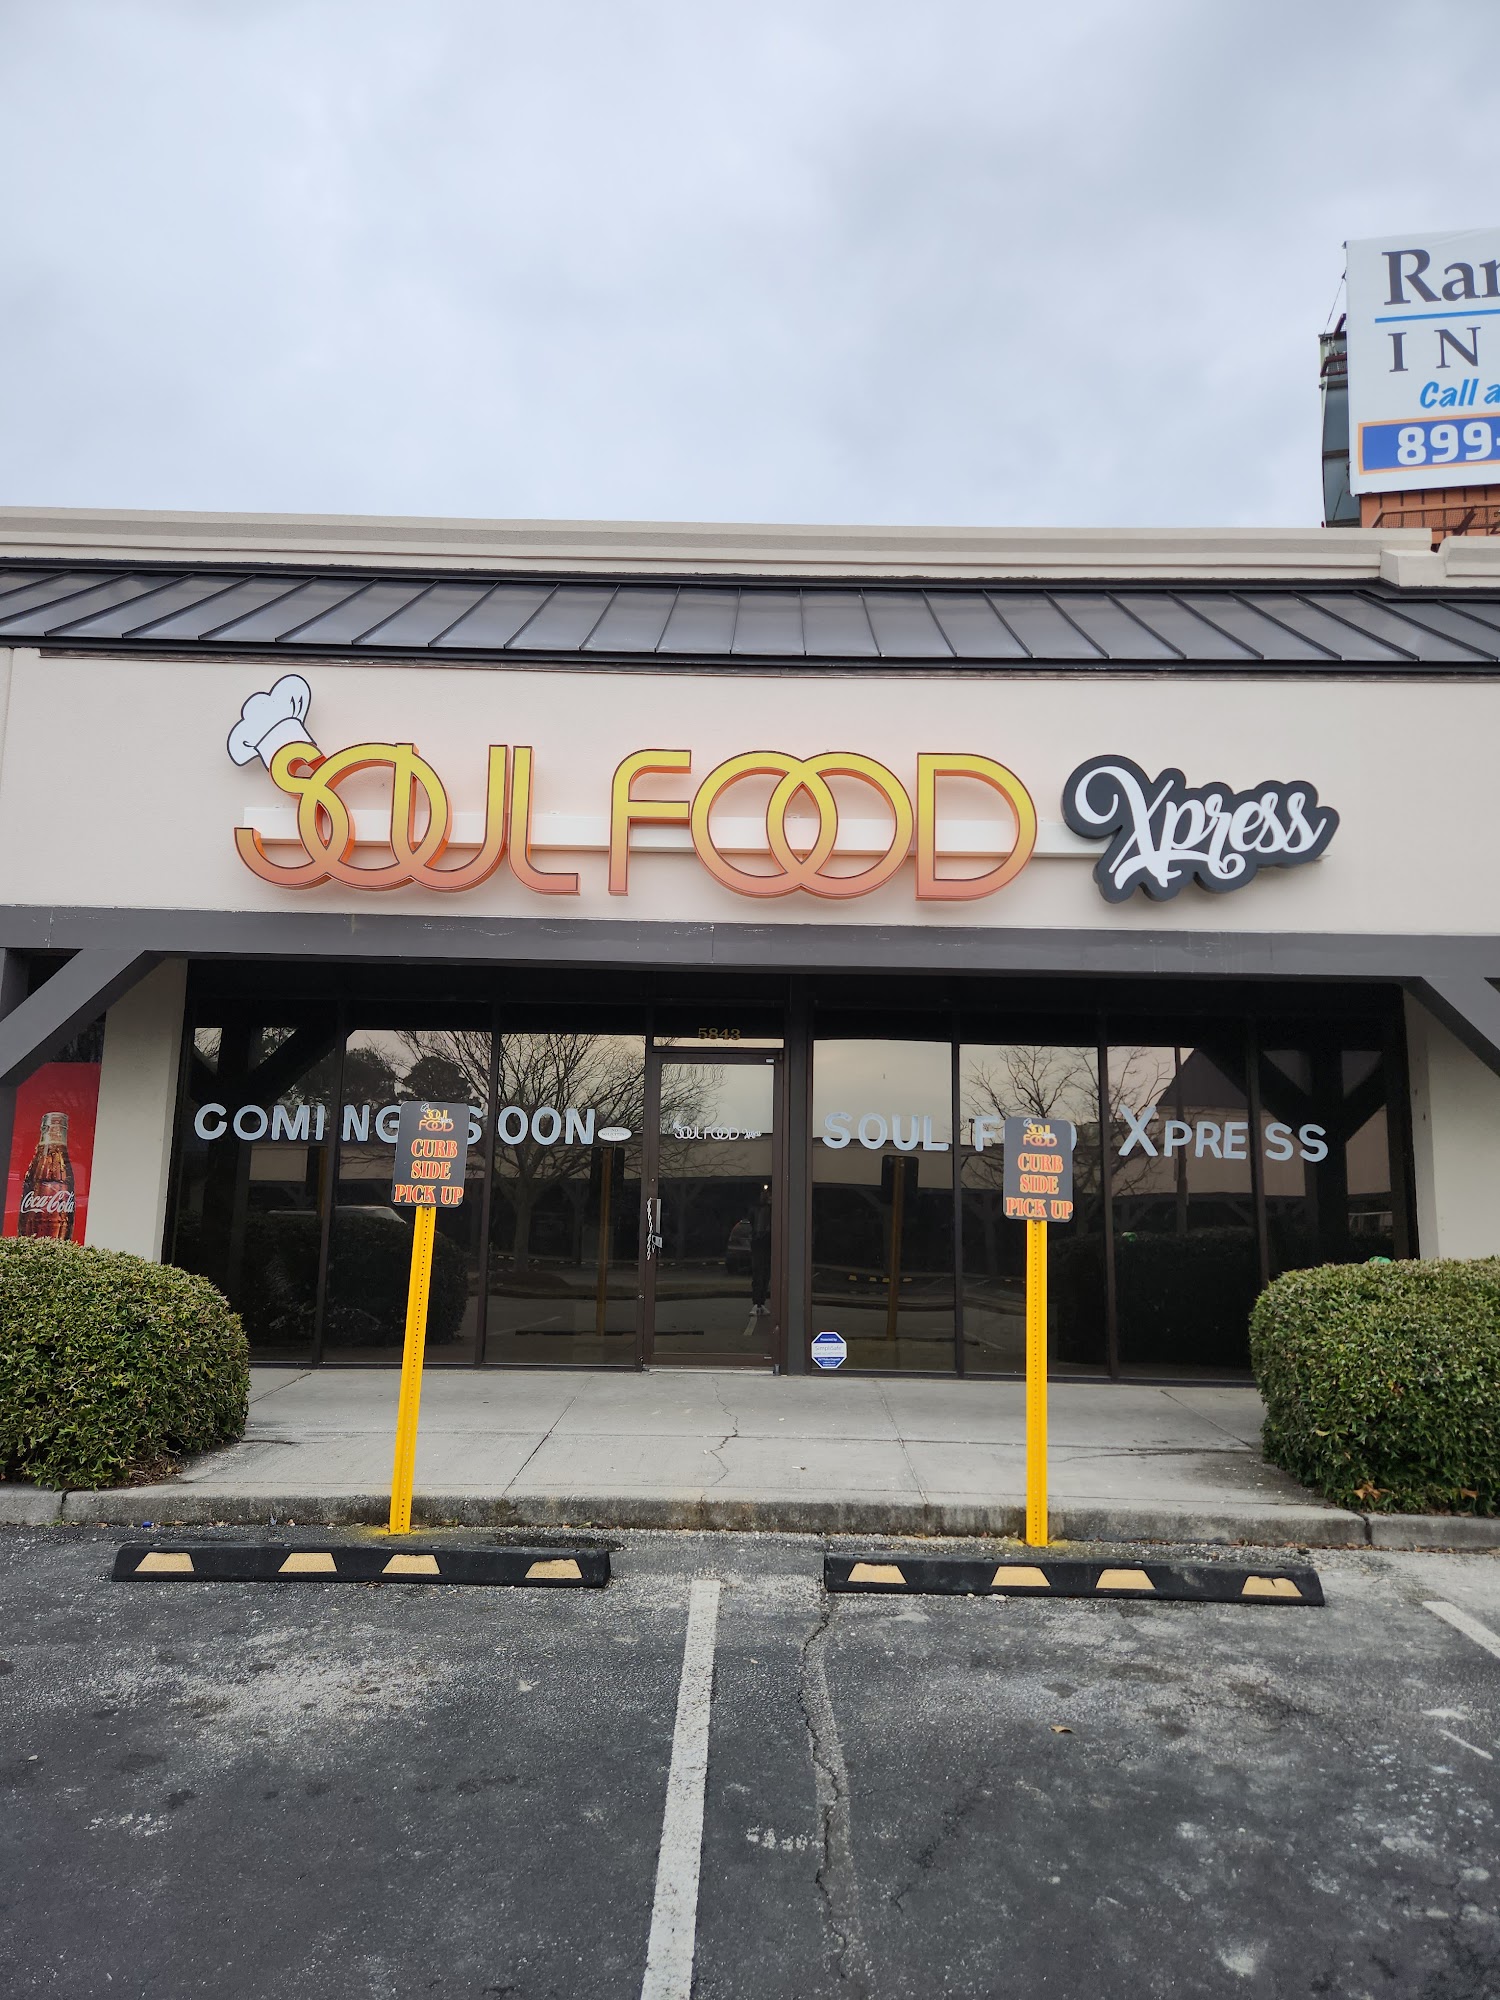 Soul food xpress